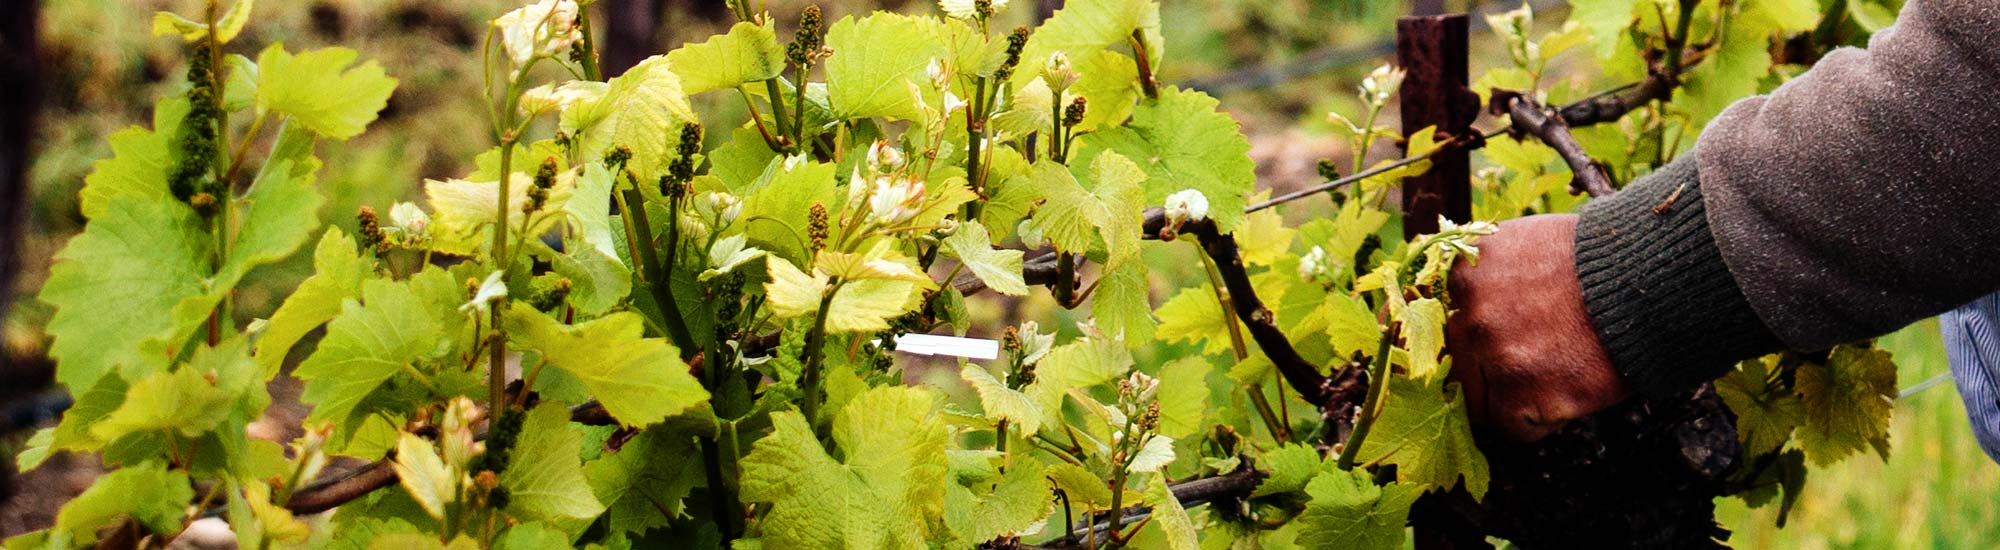 Planet Grape Wine Reviews Top Ten Green Wines